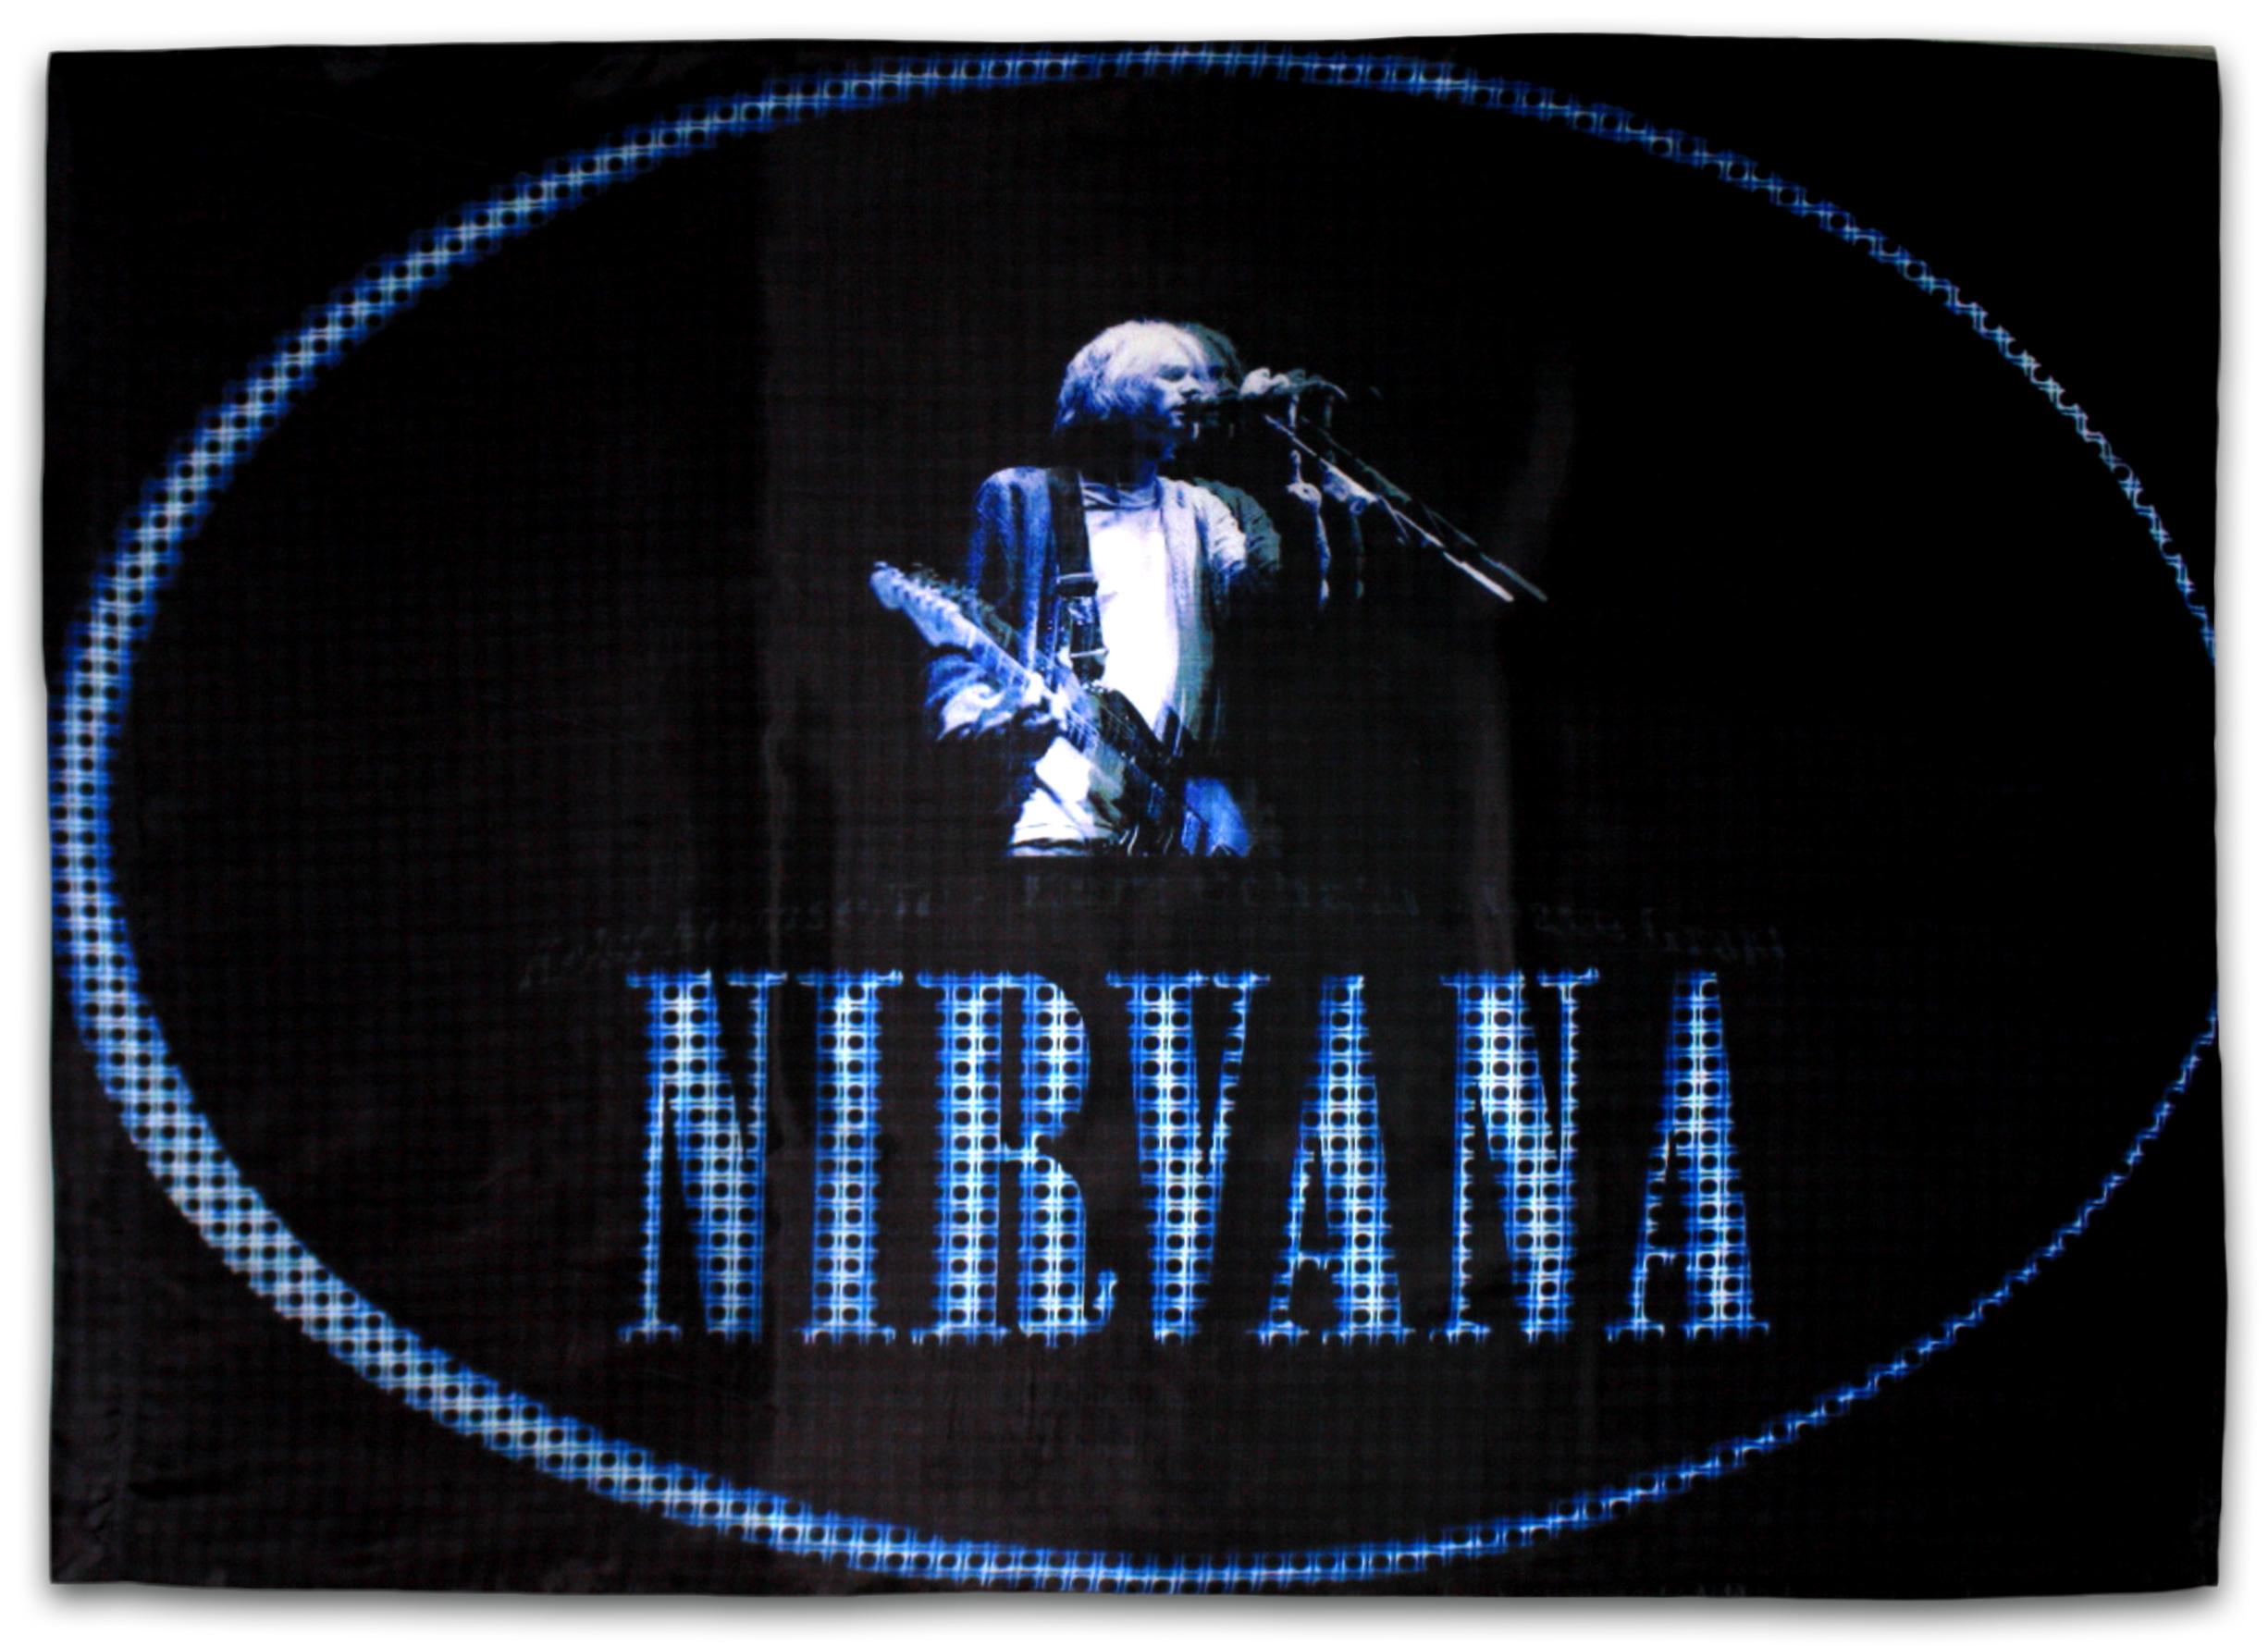 Флаг Nirvana - фото 2 - rockbunker.ru